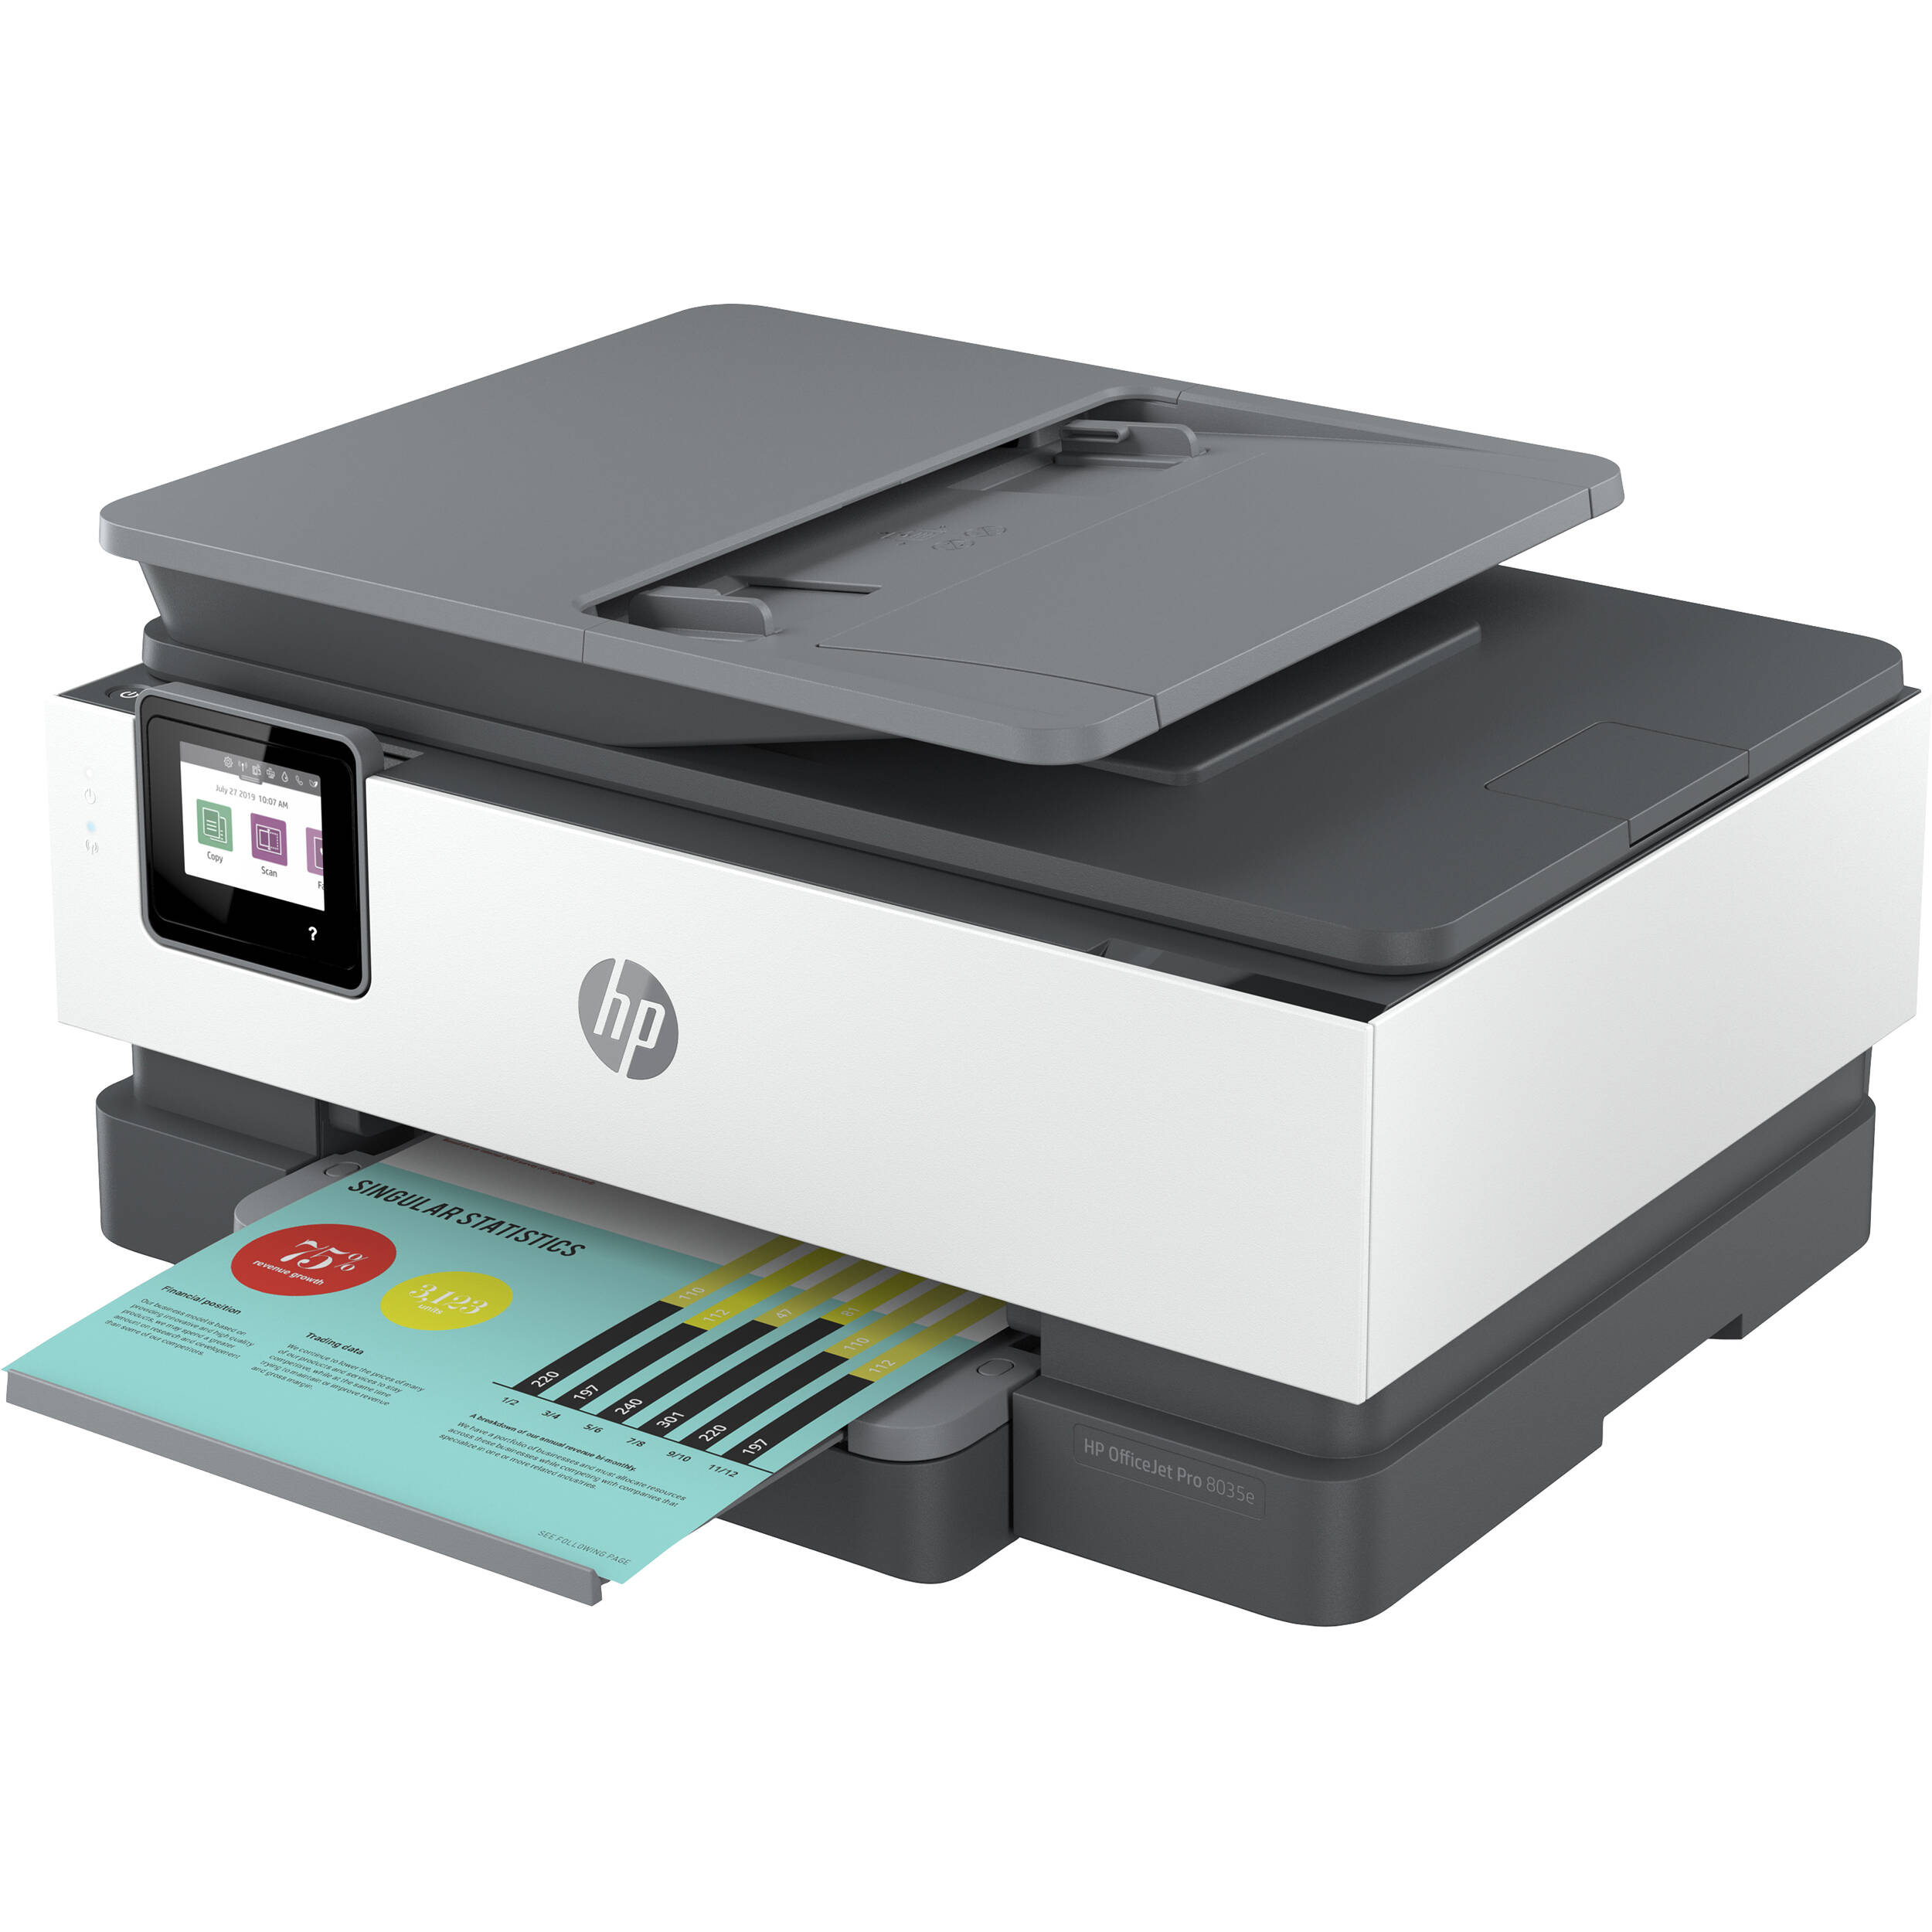 HP HP-OJPRO8035E-B-RB OfficeJet Pro 8035 All-in-One Printer, Basalt - Certified Refurbished